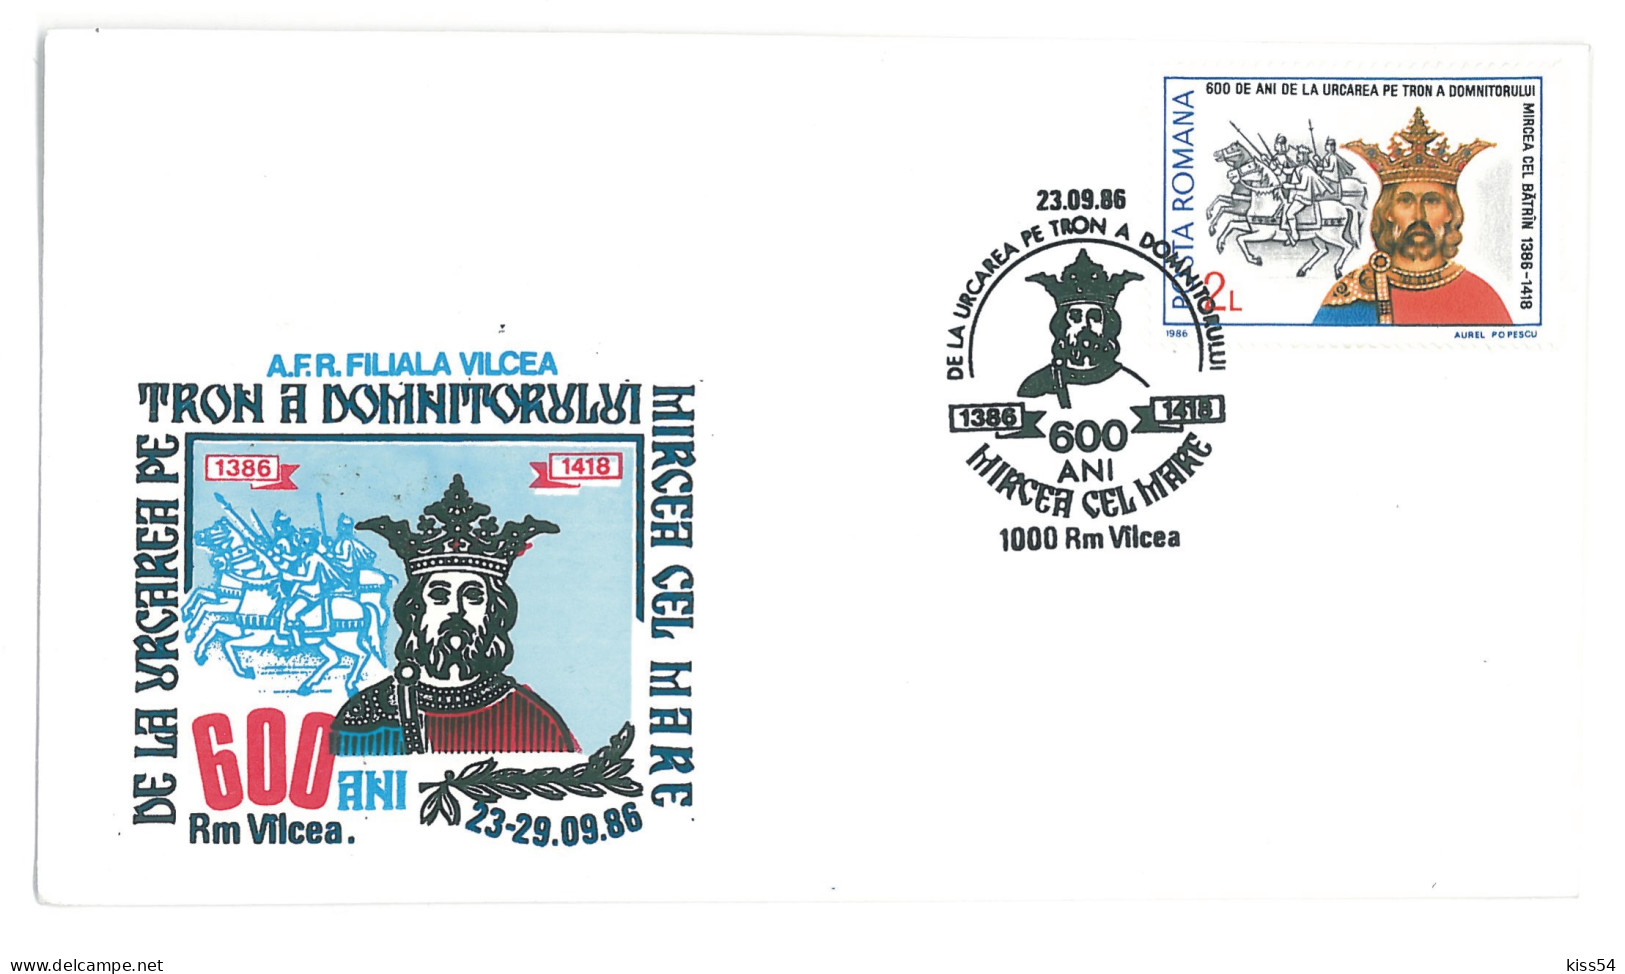 COV 42 - 1580, MIRCEA Cel BATRAN, Romania - Cover - Used - 1986 - Covers & Documents